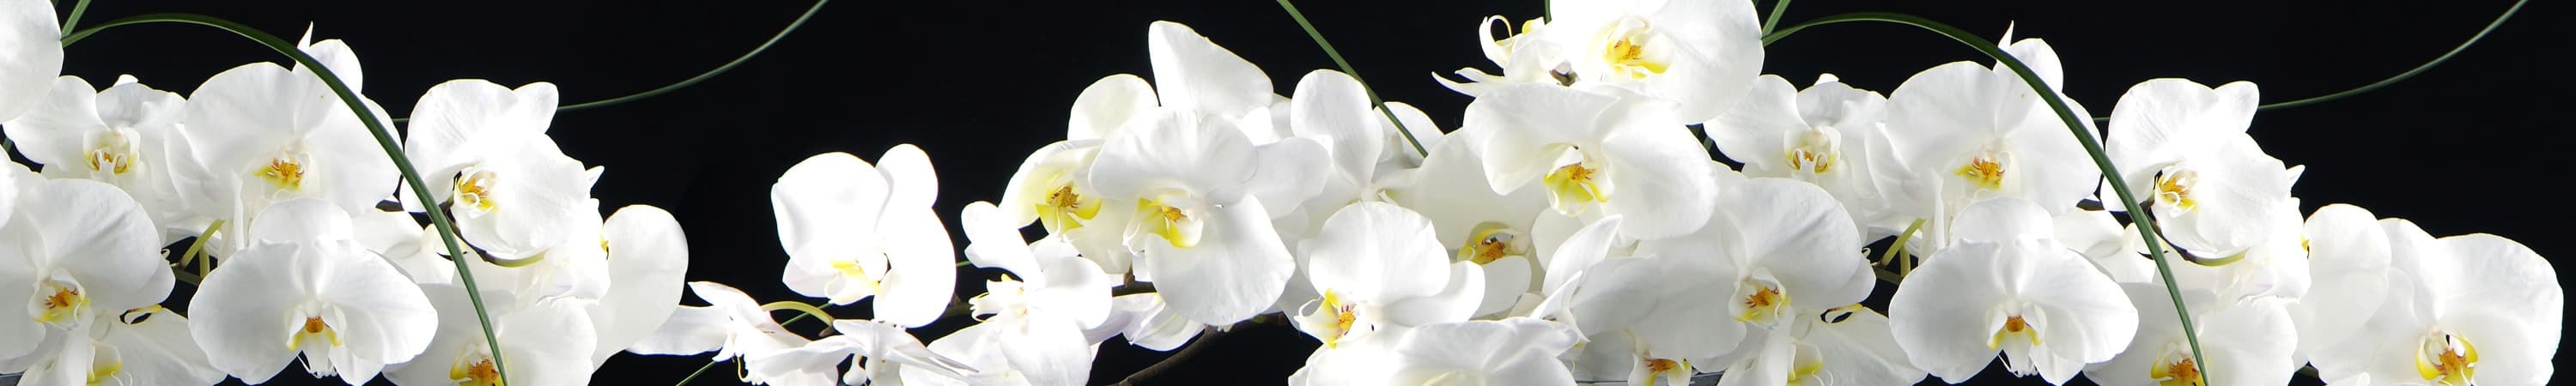 Скинали орхидеи на черном фоне